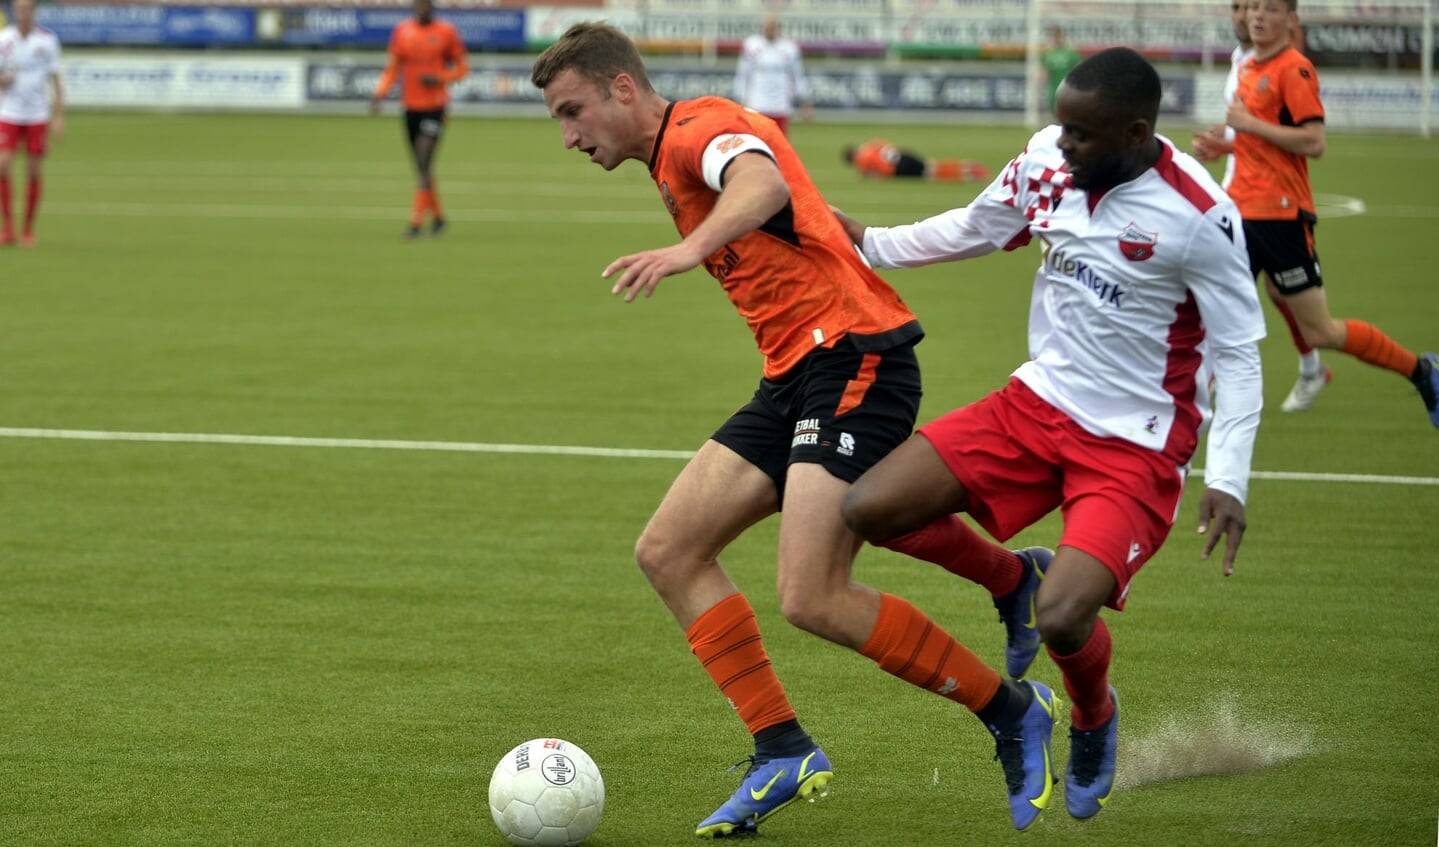 • Kozakken Boys - Jong FC Volendam (3-5).